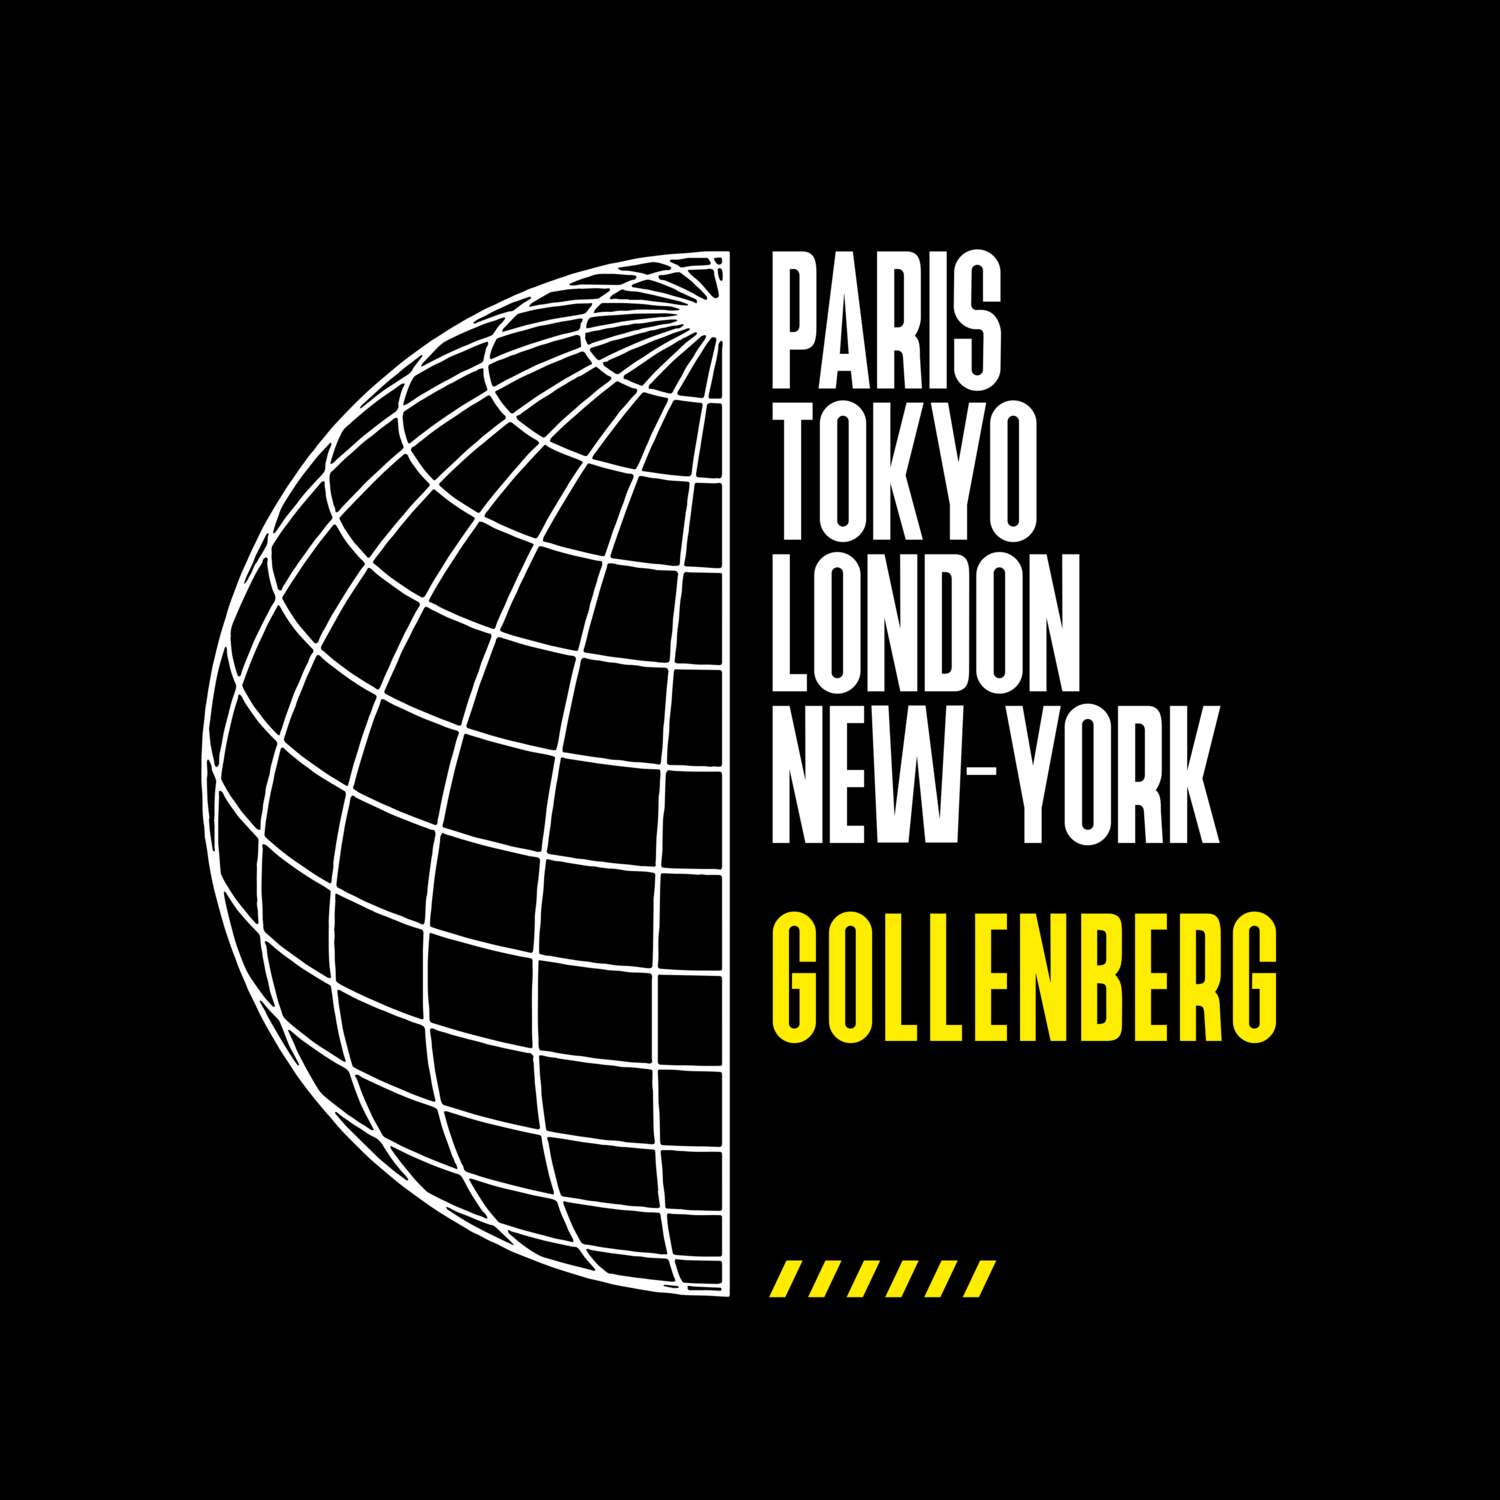 Gollenberg T-Shirt »Paris Tokyo London«